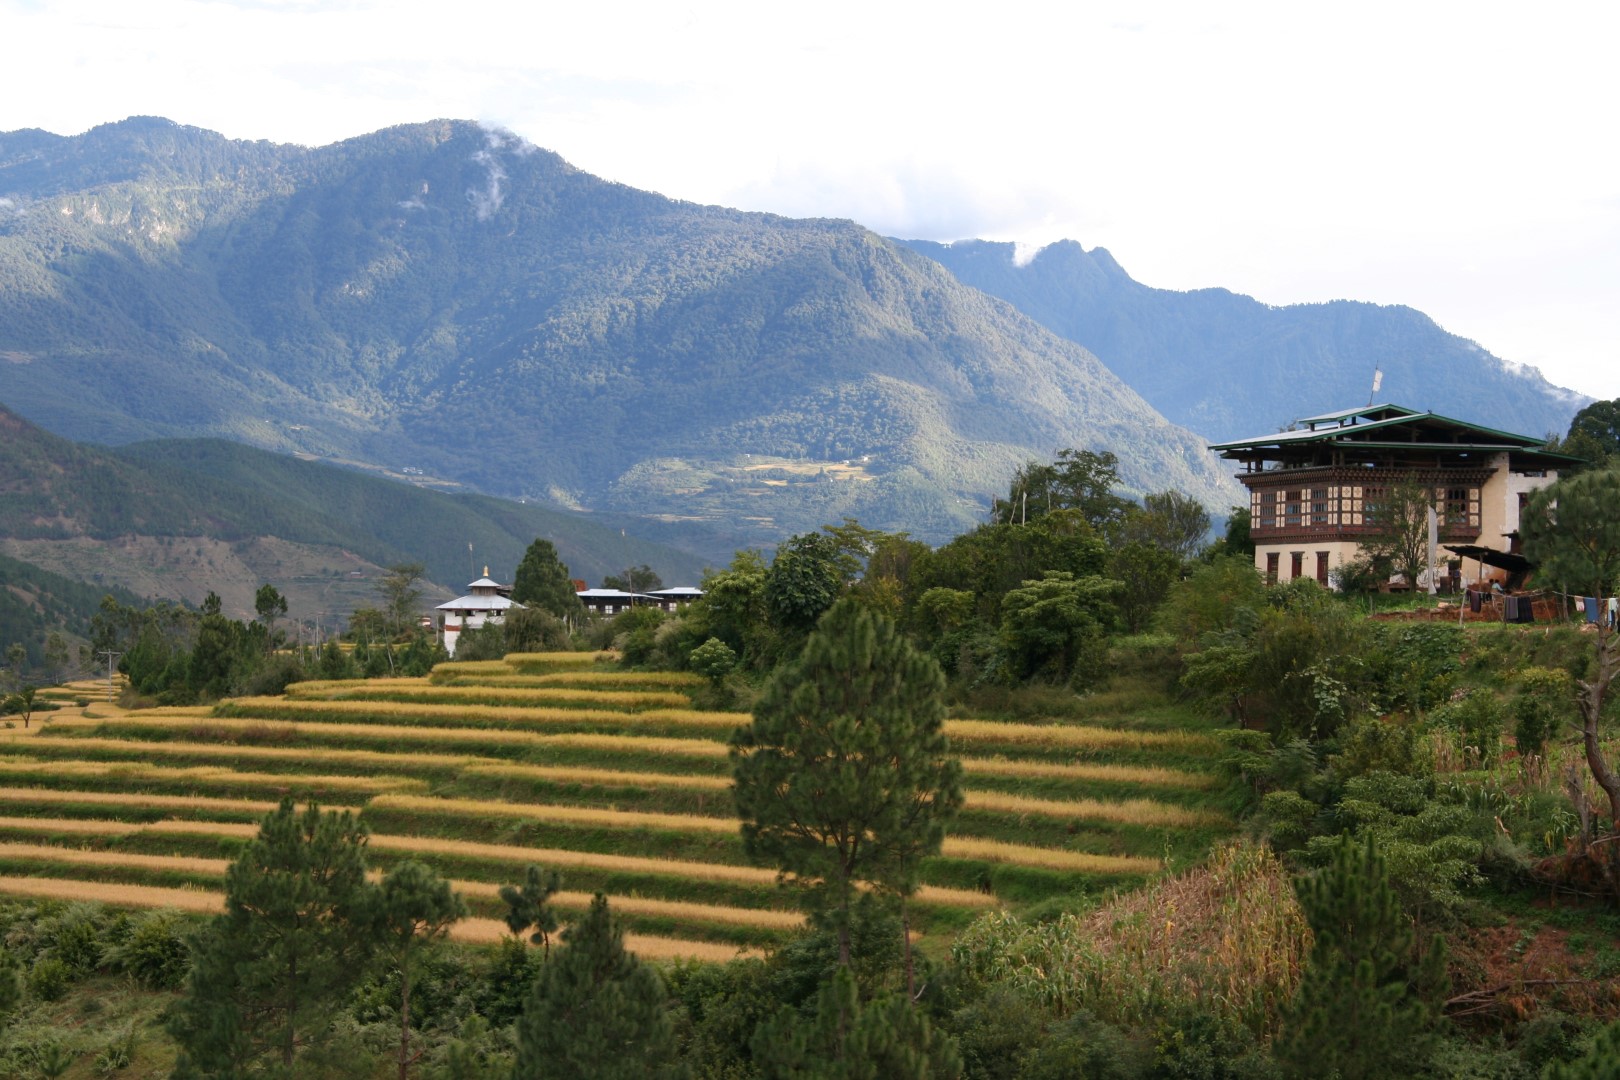 wp-content/uploads/itineraries/Bhutan/bhutan (20).jpg